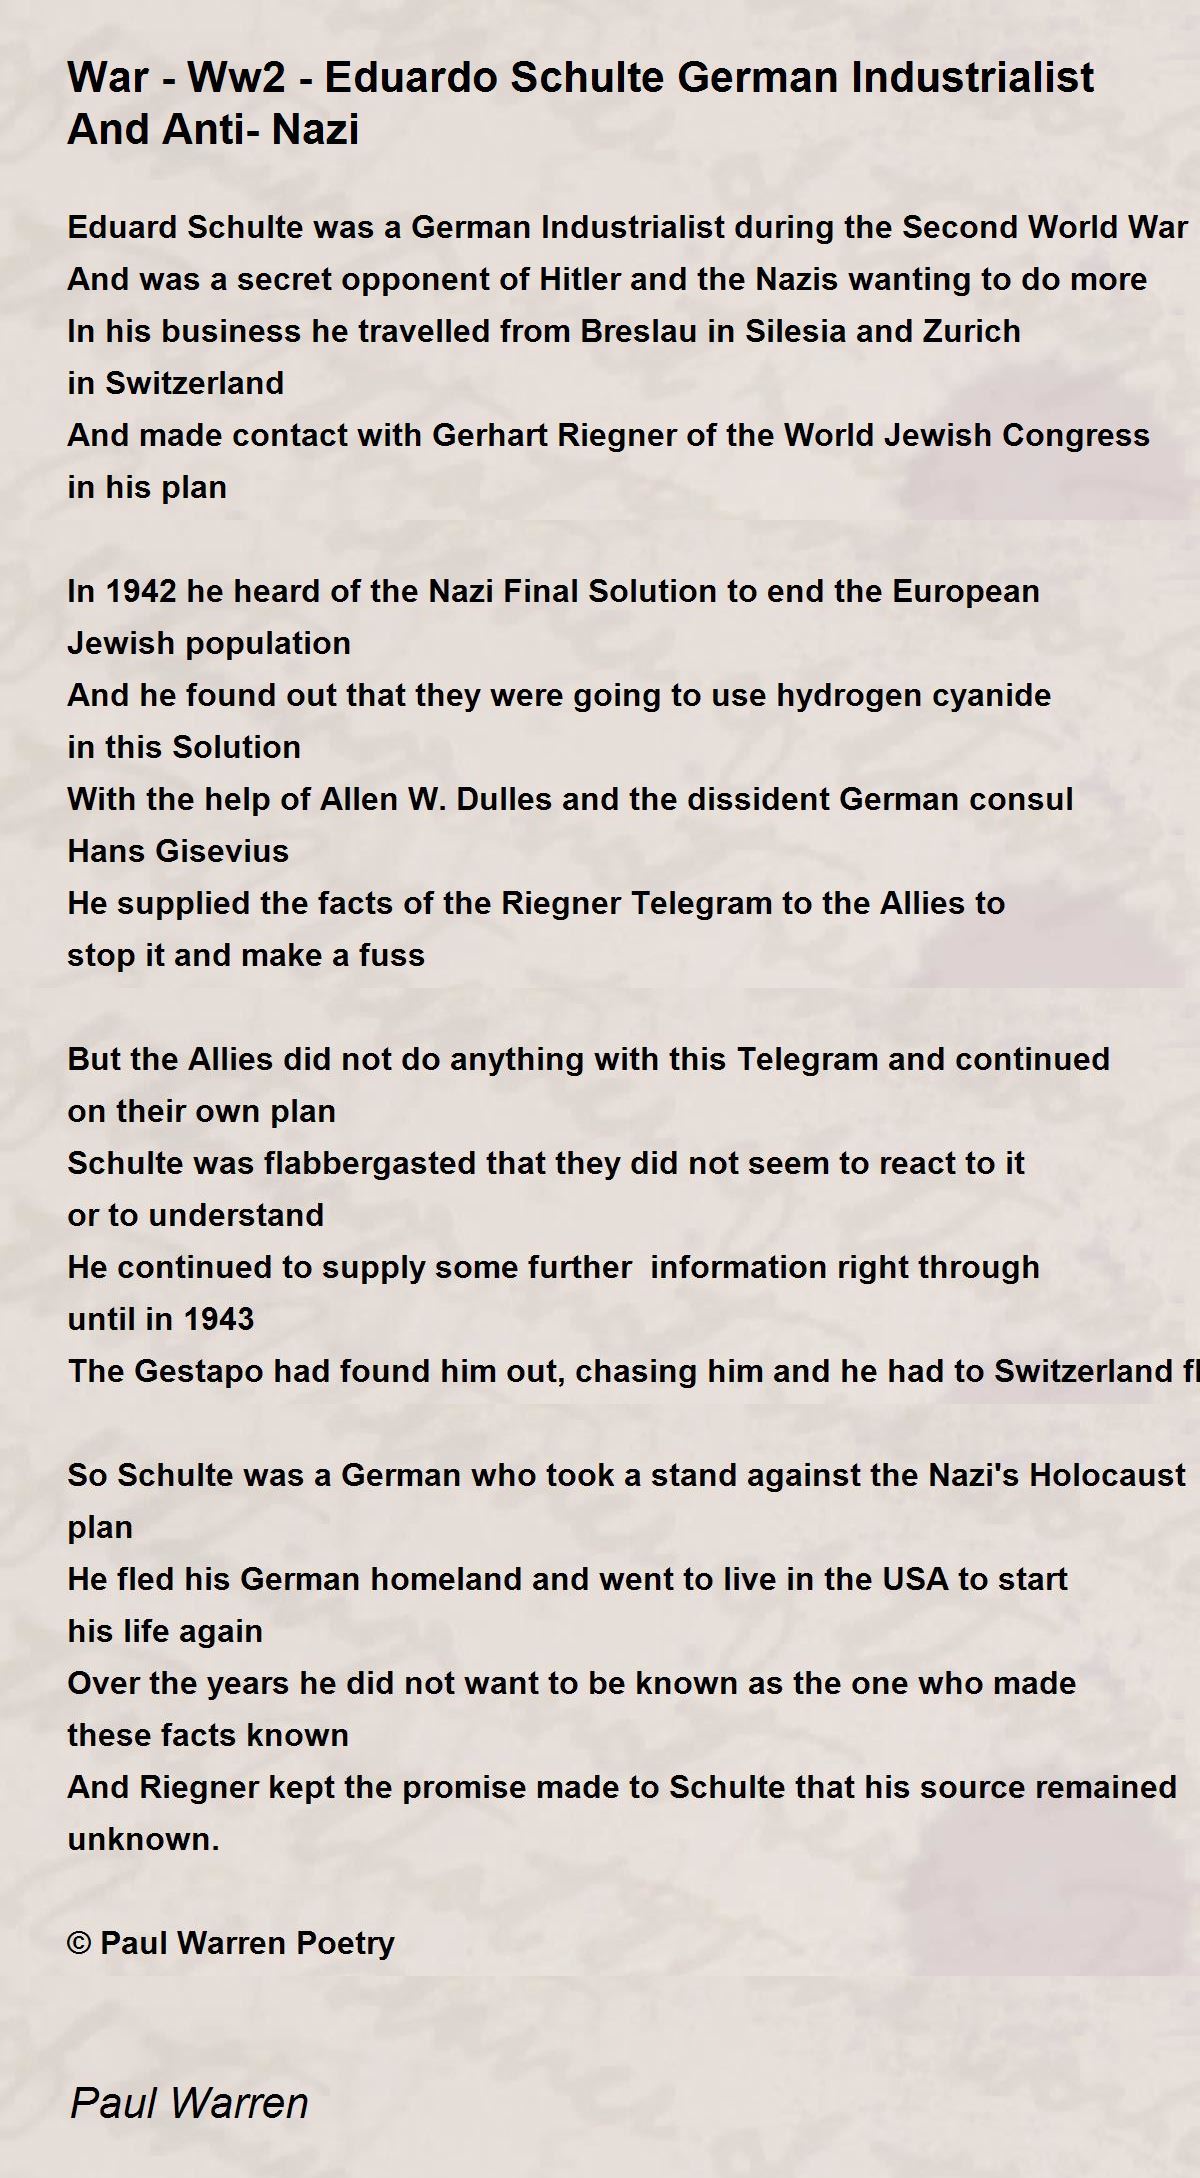 War - Ww2 - Eduardo Schulte German Industrialist And Anti-Nazi - War ...